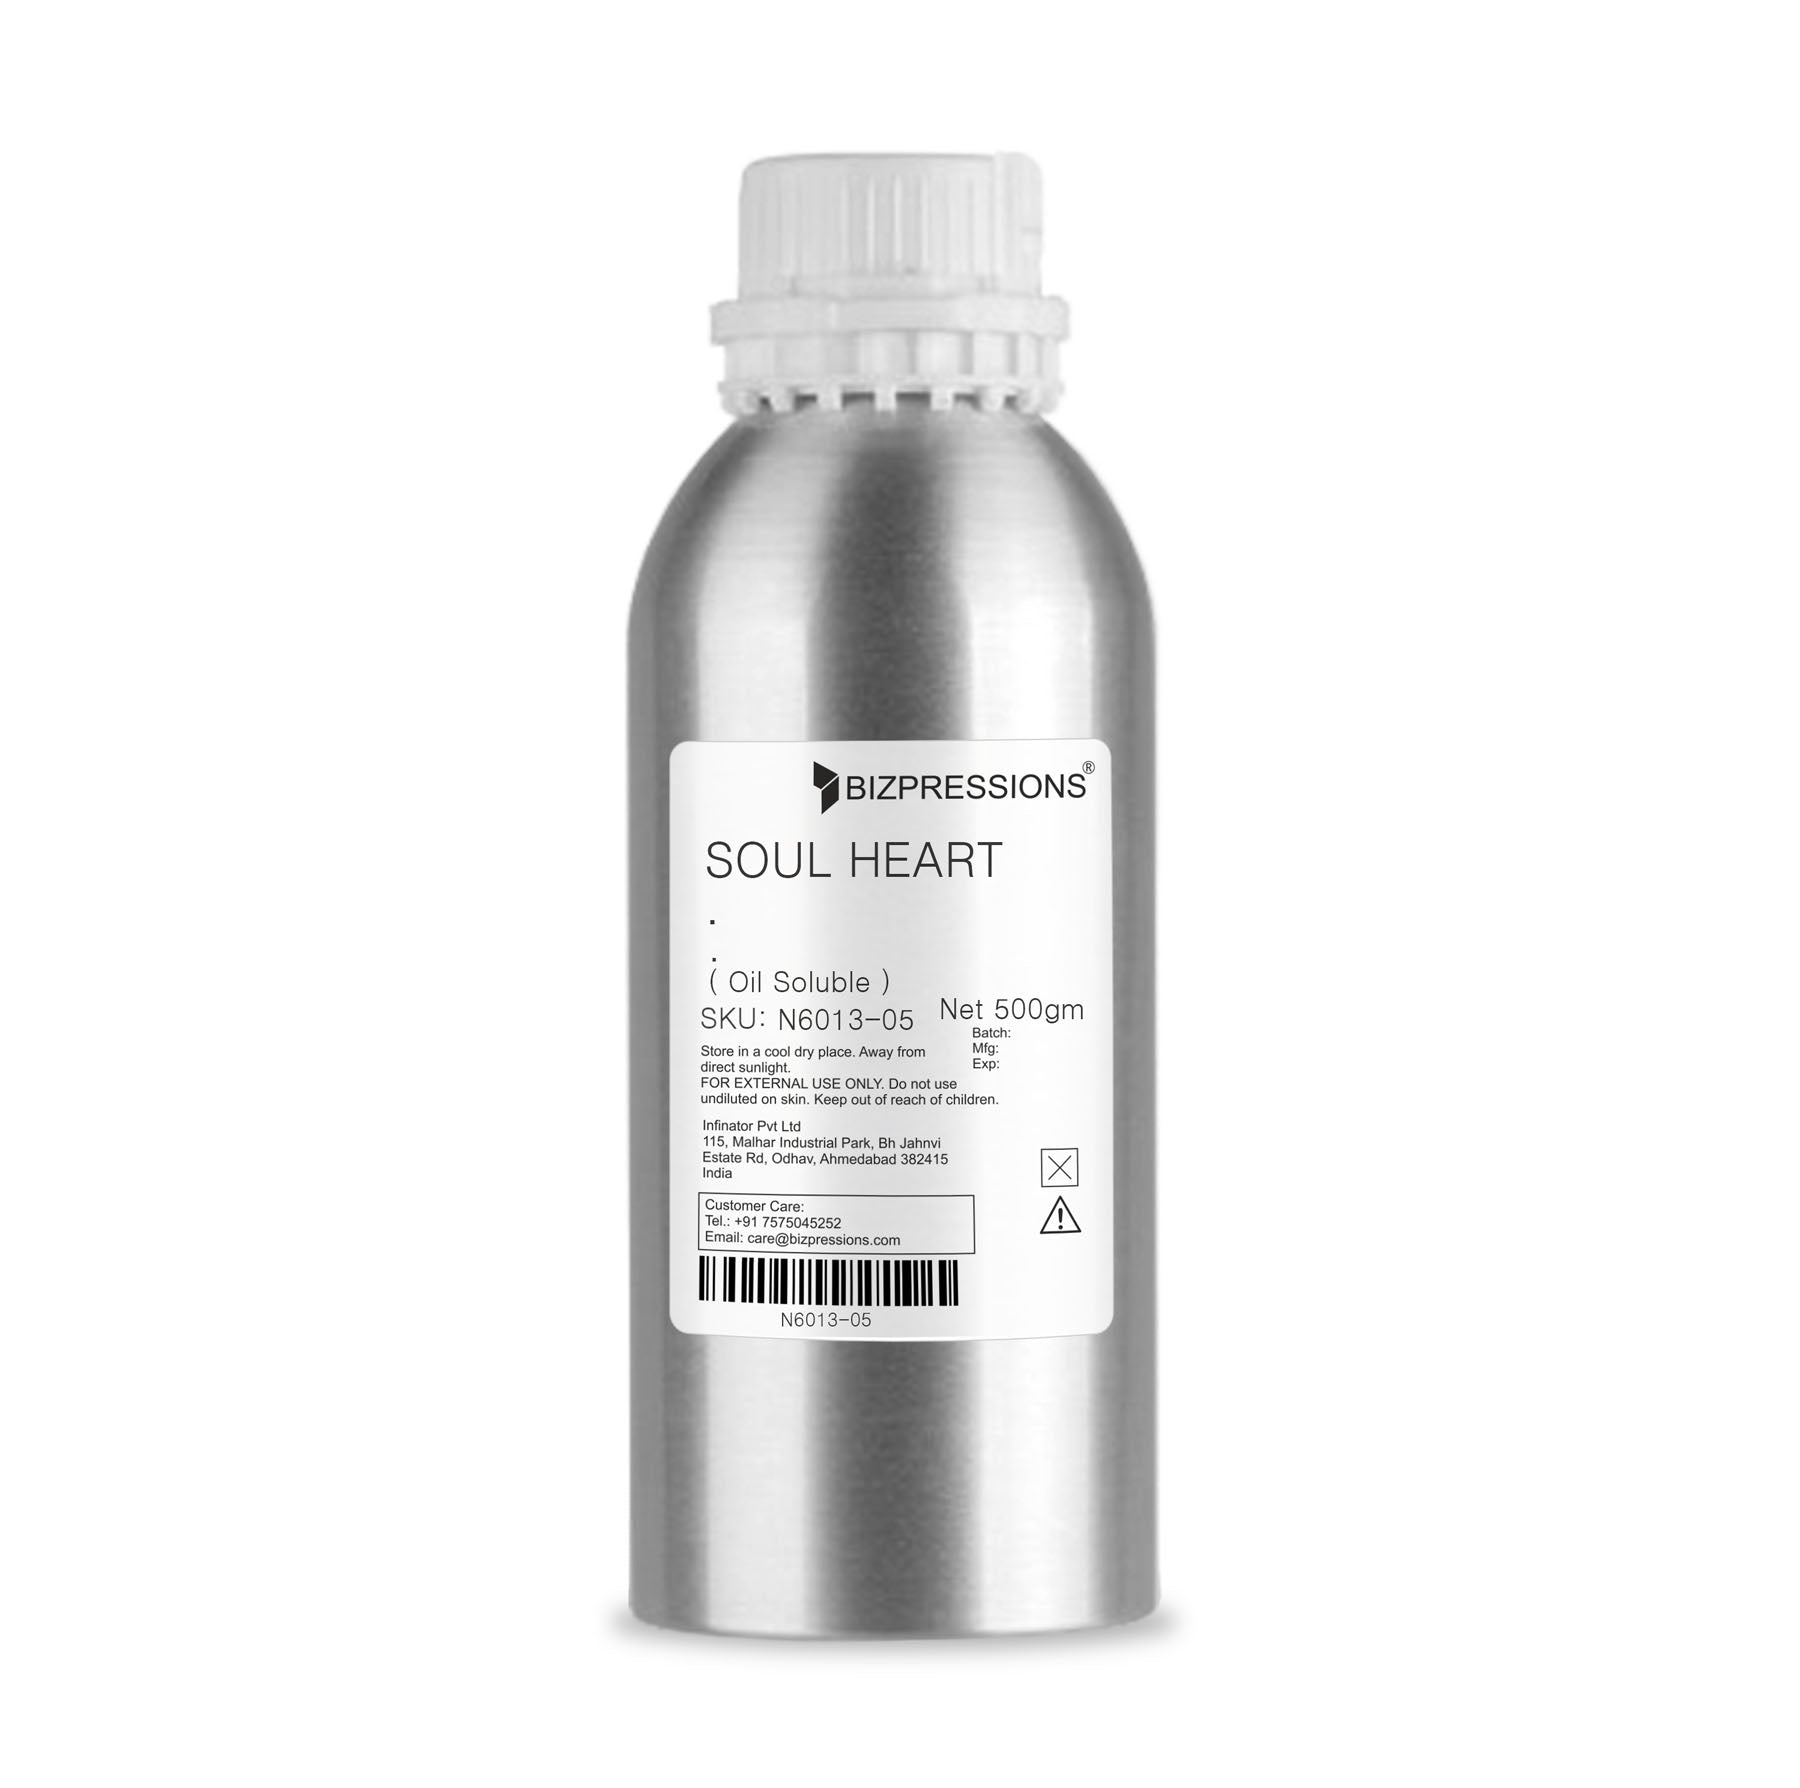 SOUL HEART - Fragrance ( Oil Soluble ) - 500 gm